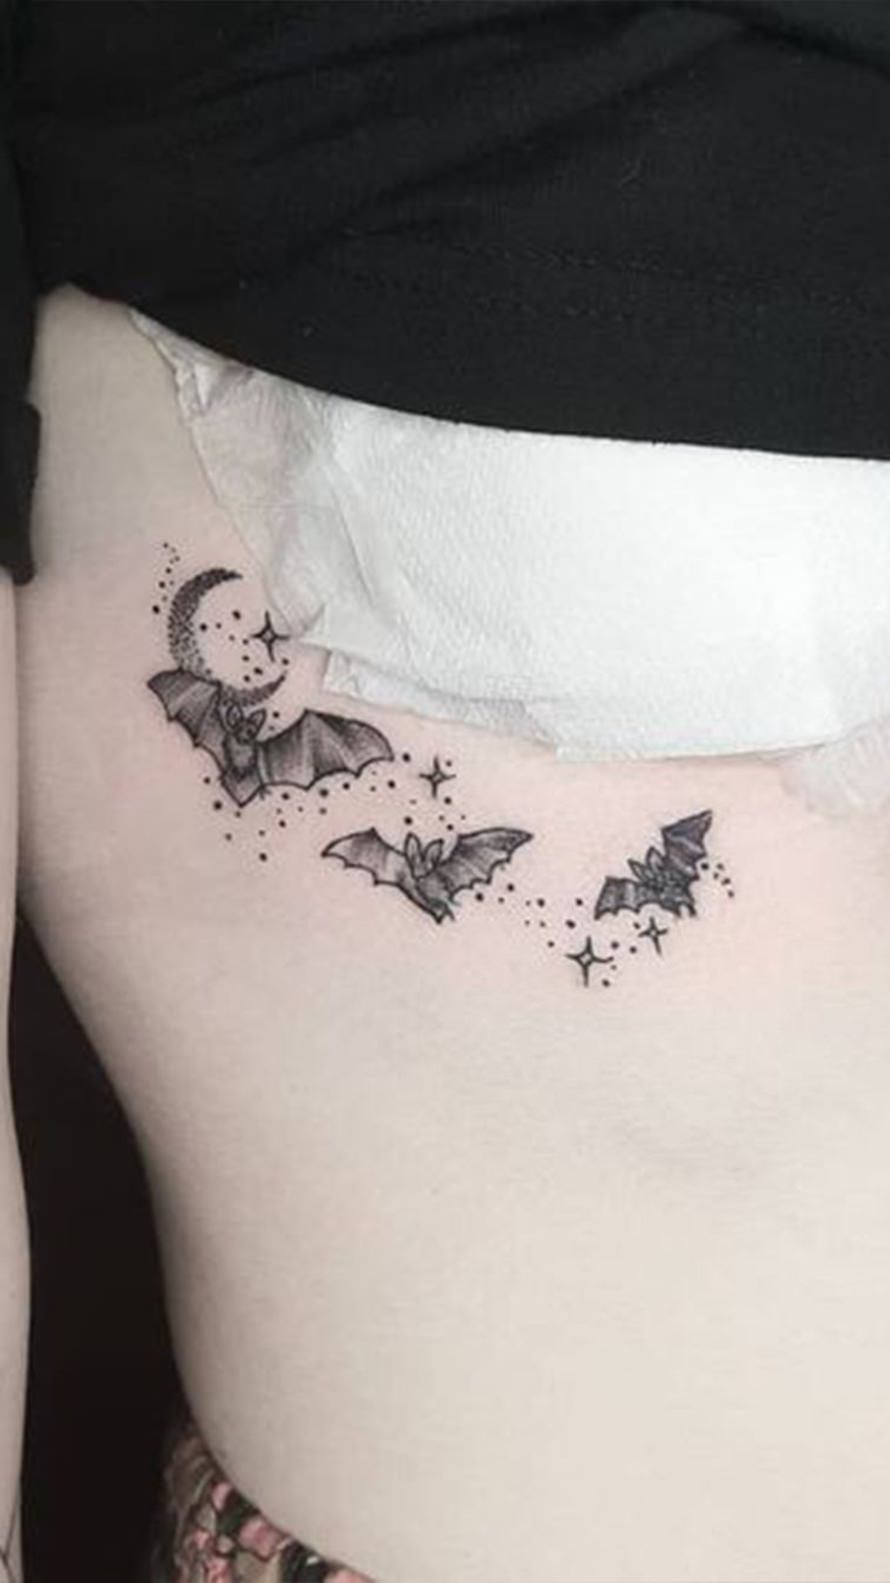 Tatuagem mística de morcegos à noite